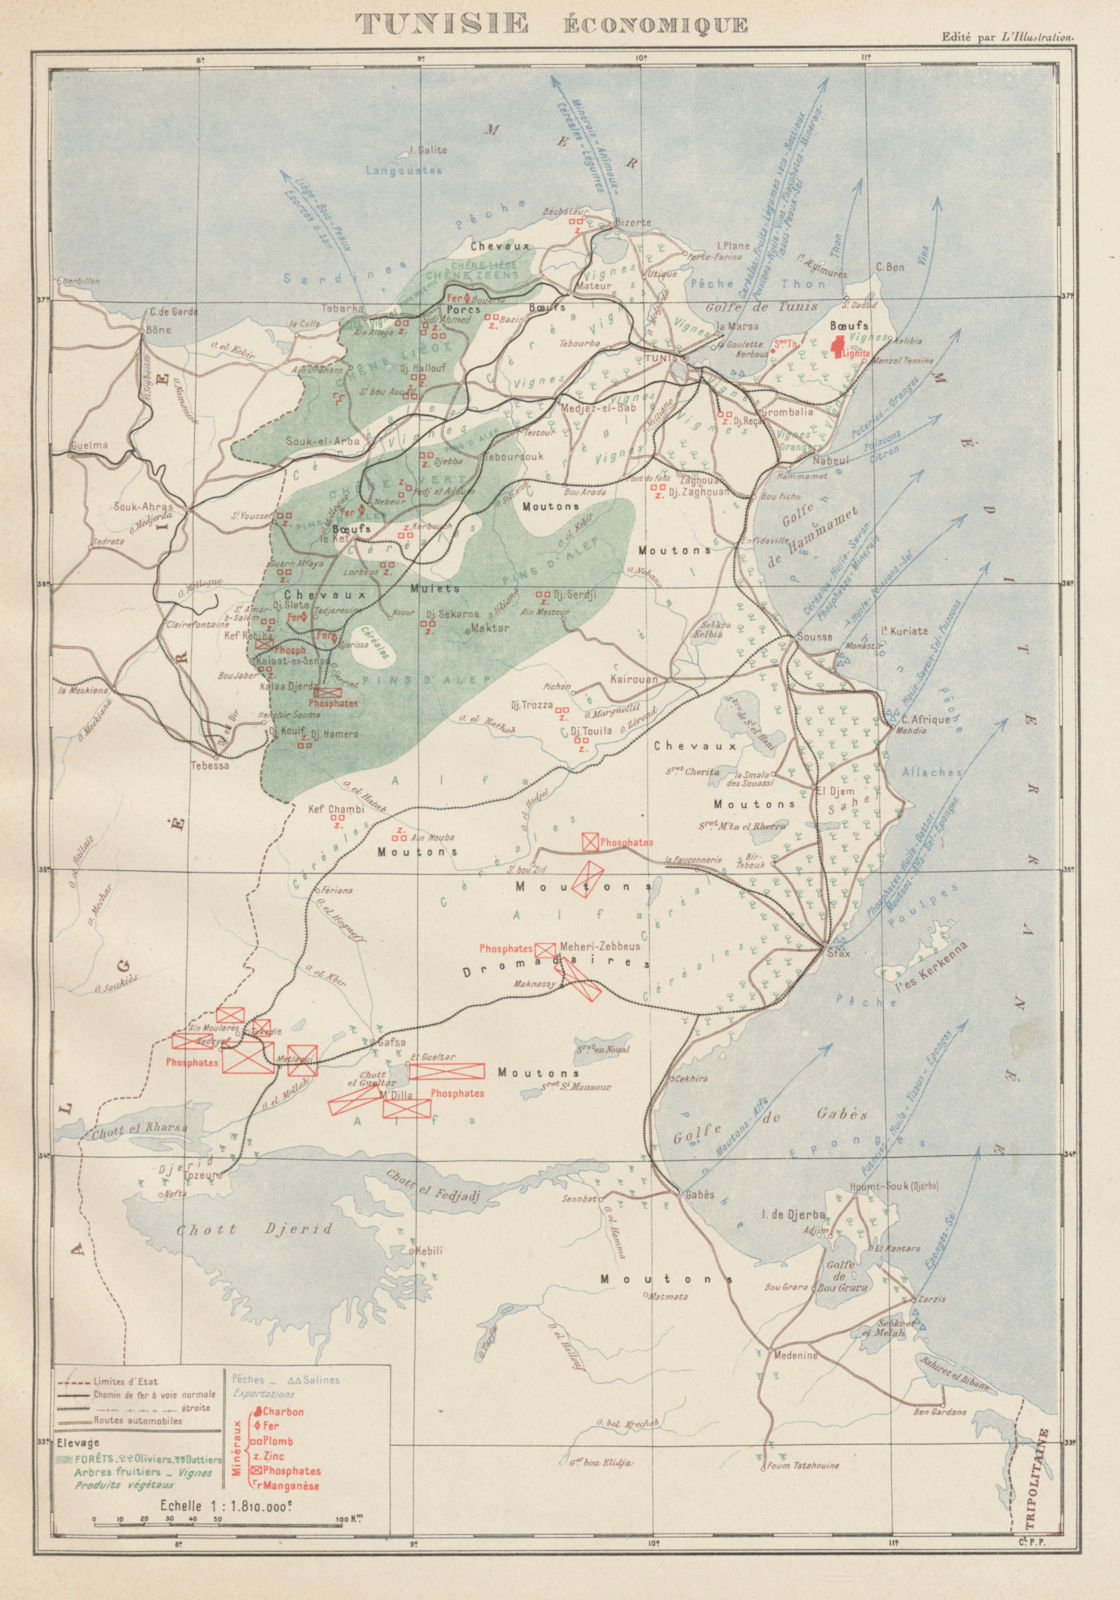 FRENCH COLONIAL TUNISIA RESOURCES. Tunisie. Economique Economic 1929 old map